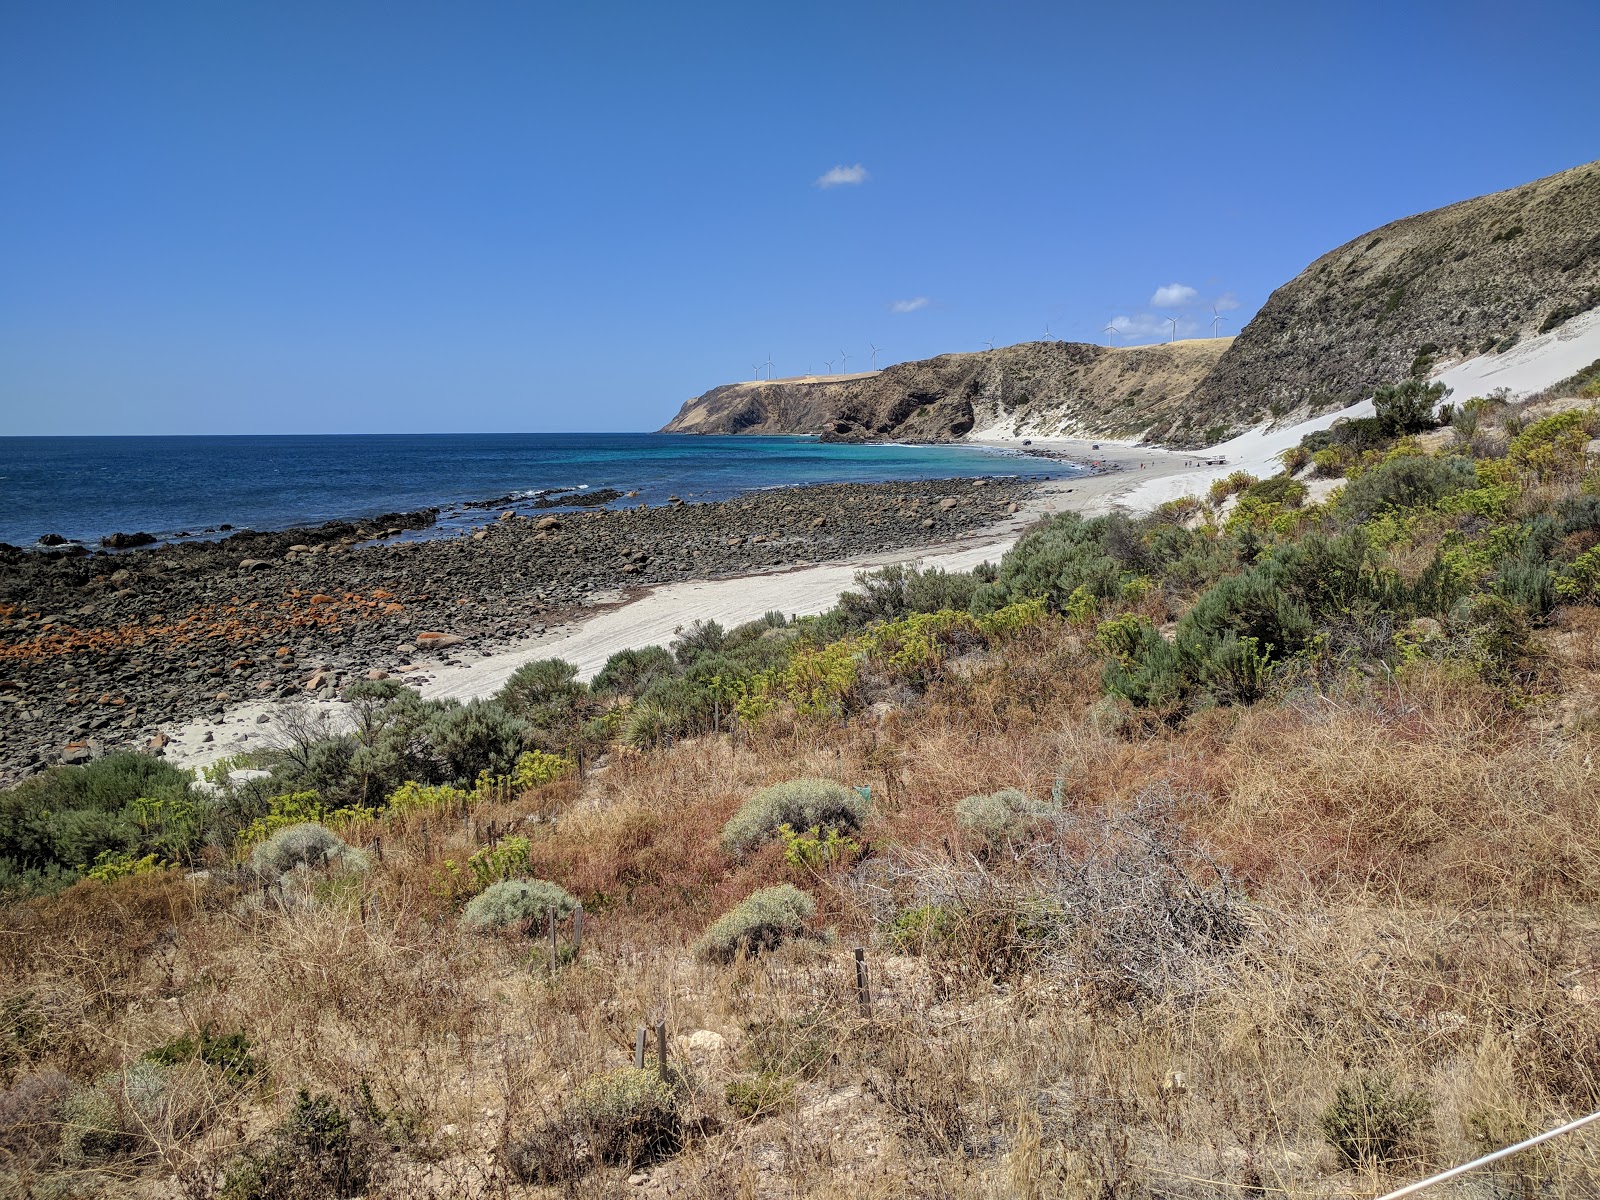 Foto di Morgans Beach ubicato in zona naturale